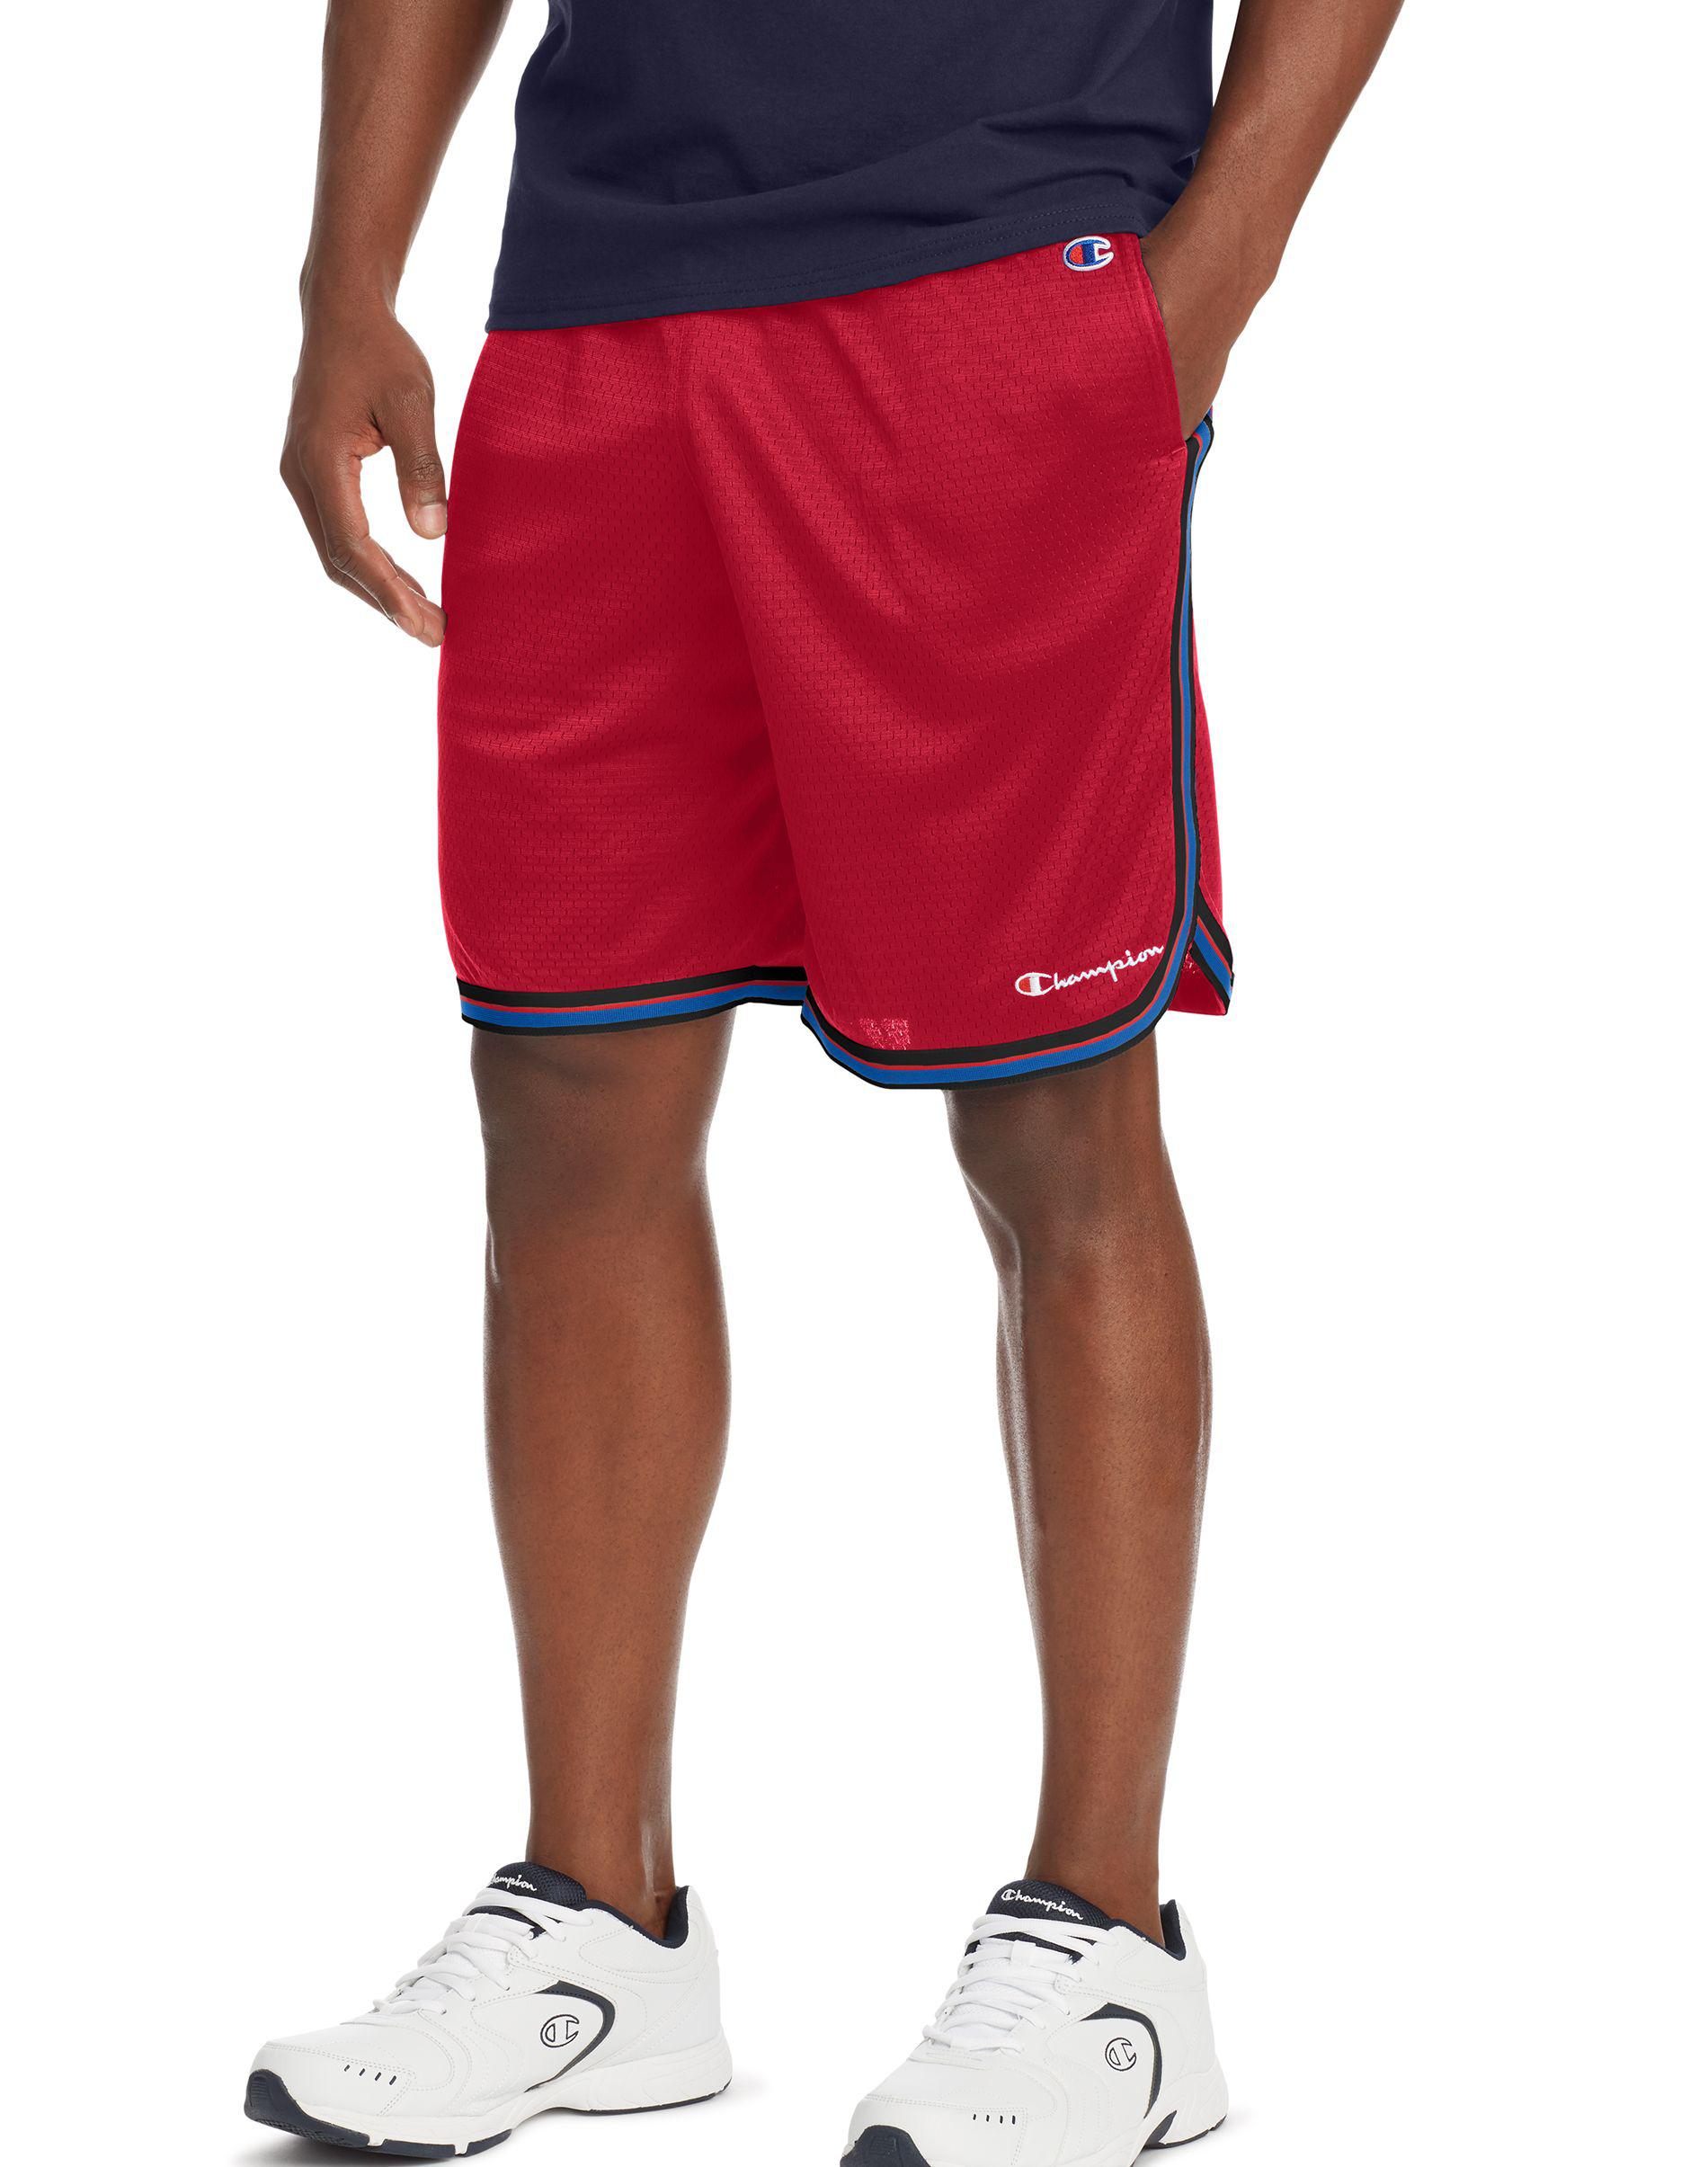 red champion basketball shorts